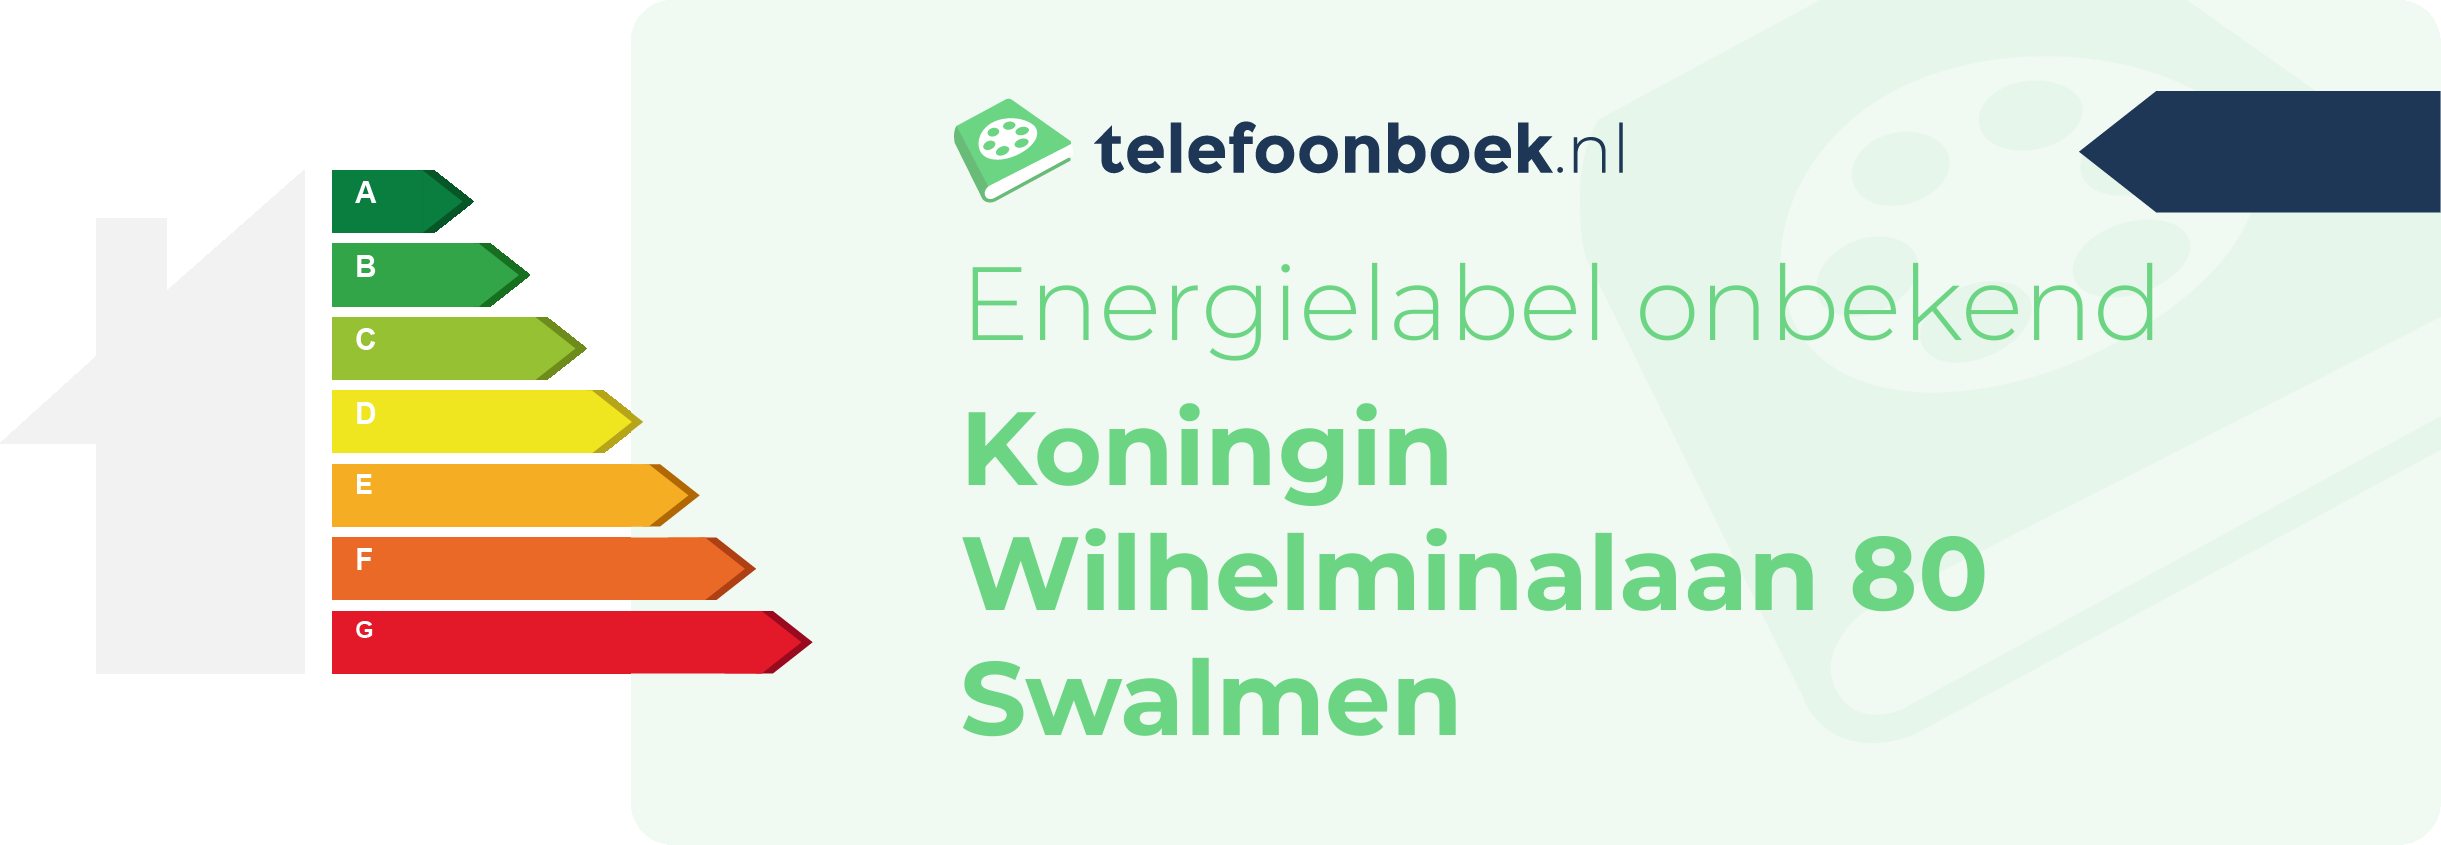 Energielabel Koningin Wilhelminalaan 80 Swalmen